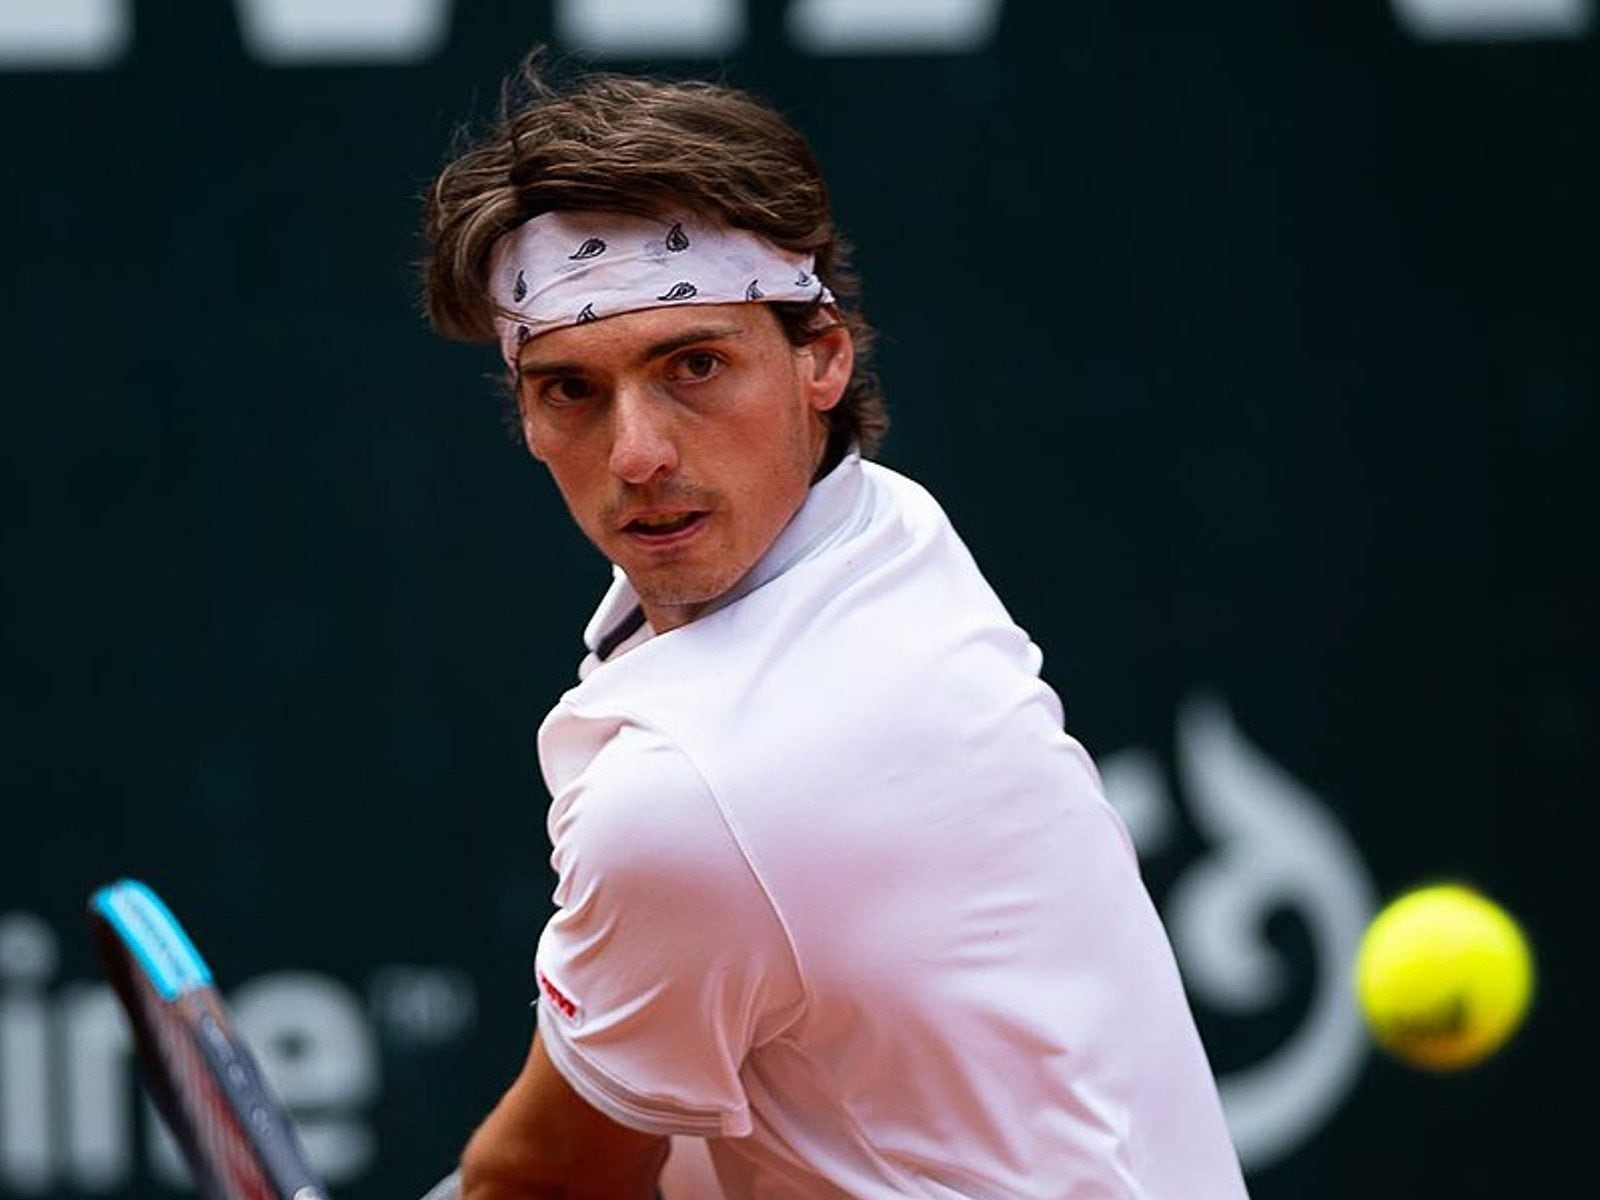 Sofia Open Marc Huesler Defeats Lorenzo Musetti to Reach His Maiden ATP Tour Final